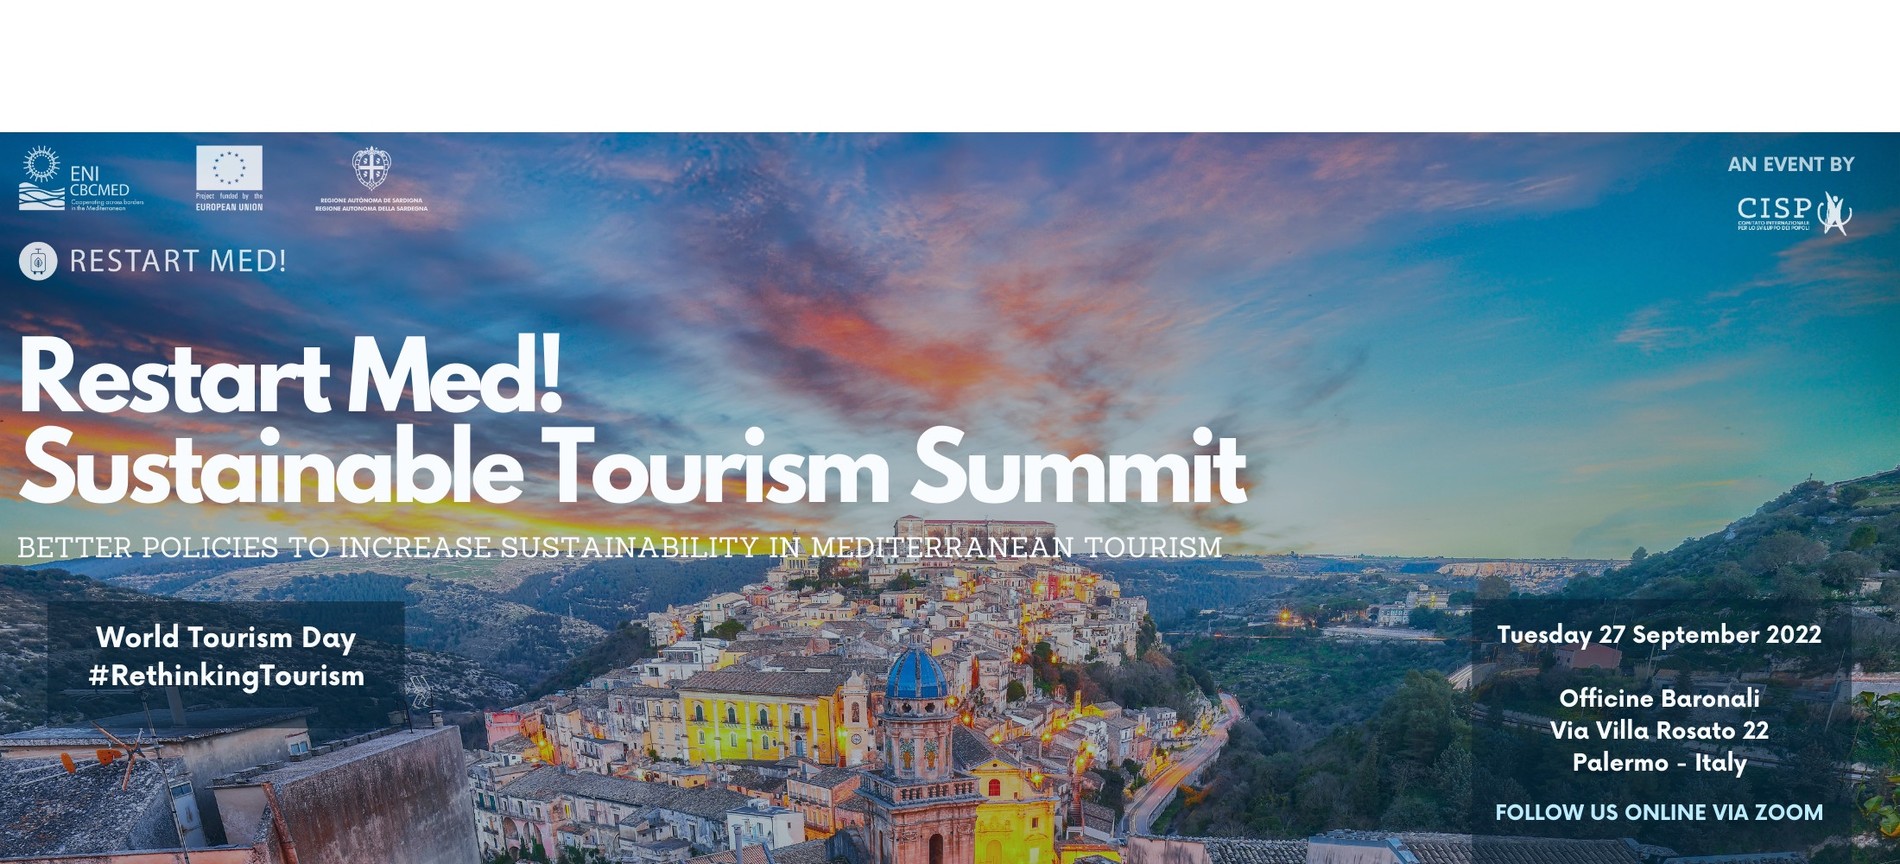 RESTART MED! organises Tourism Summit on World Tourism Day